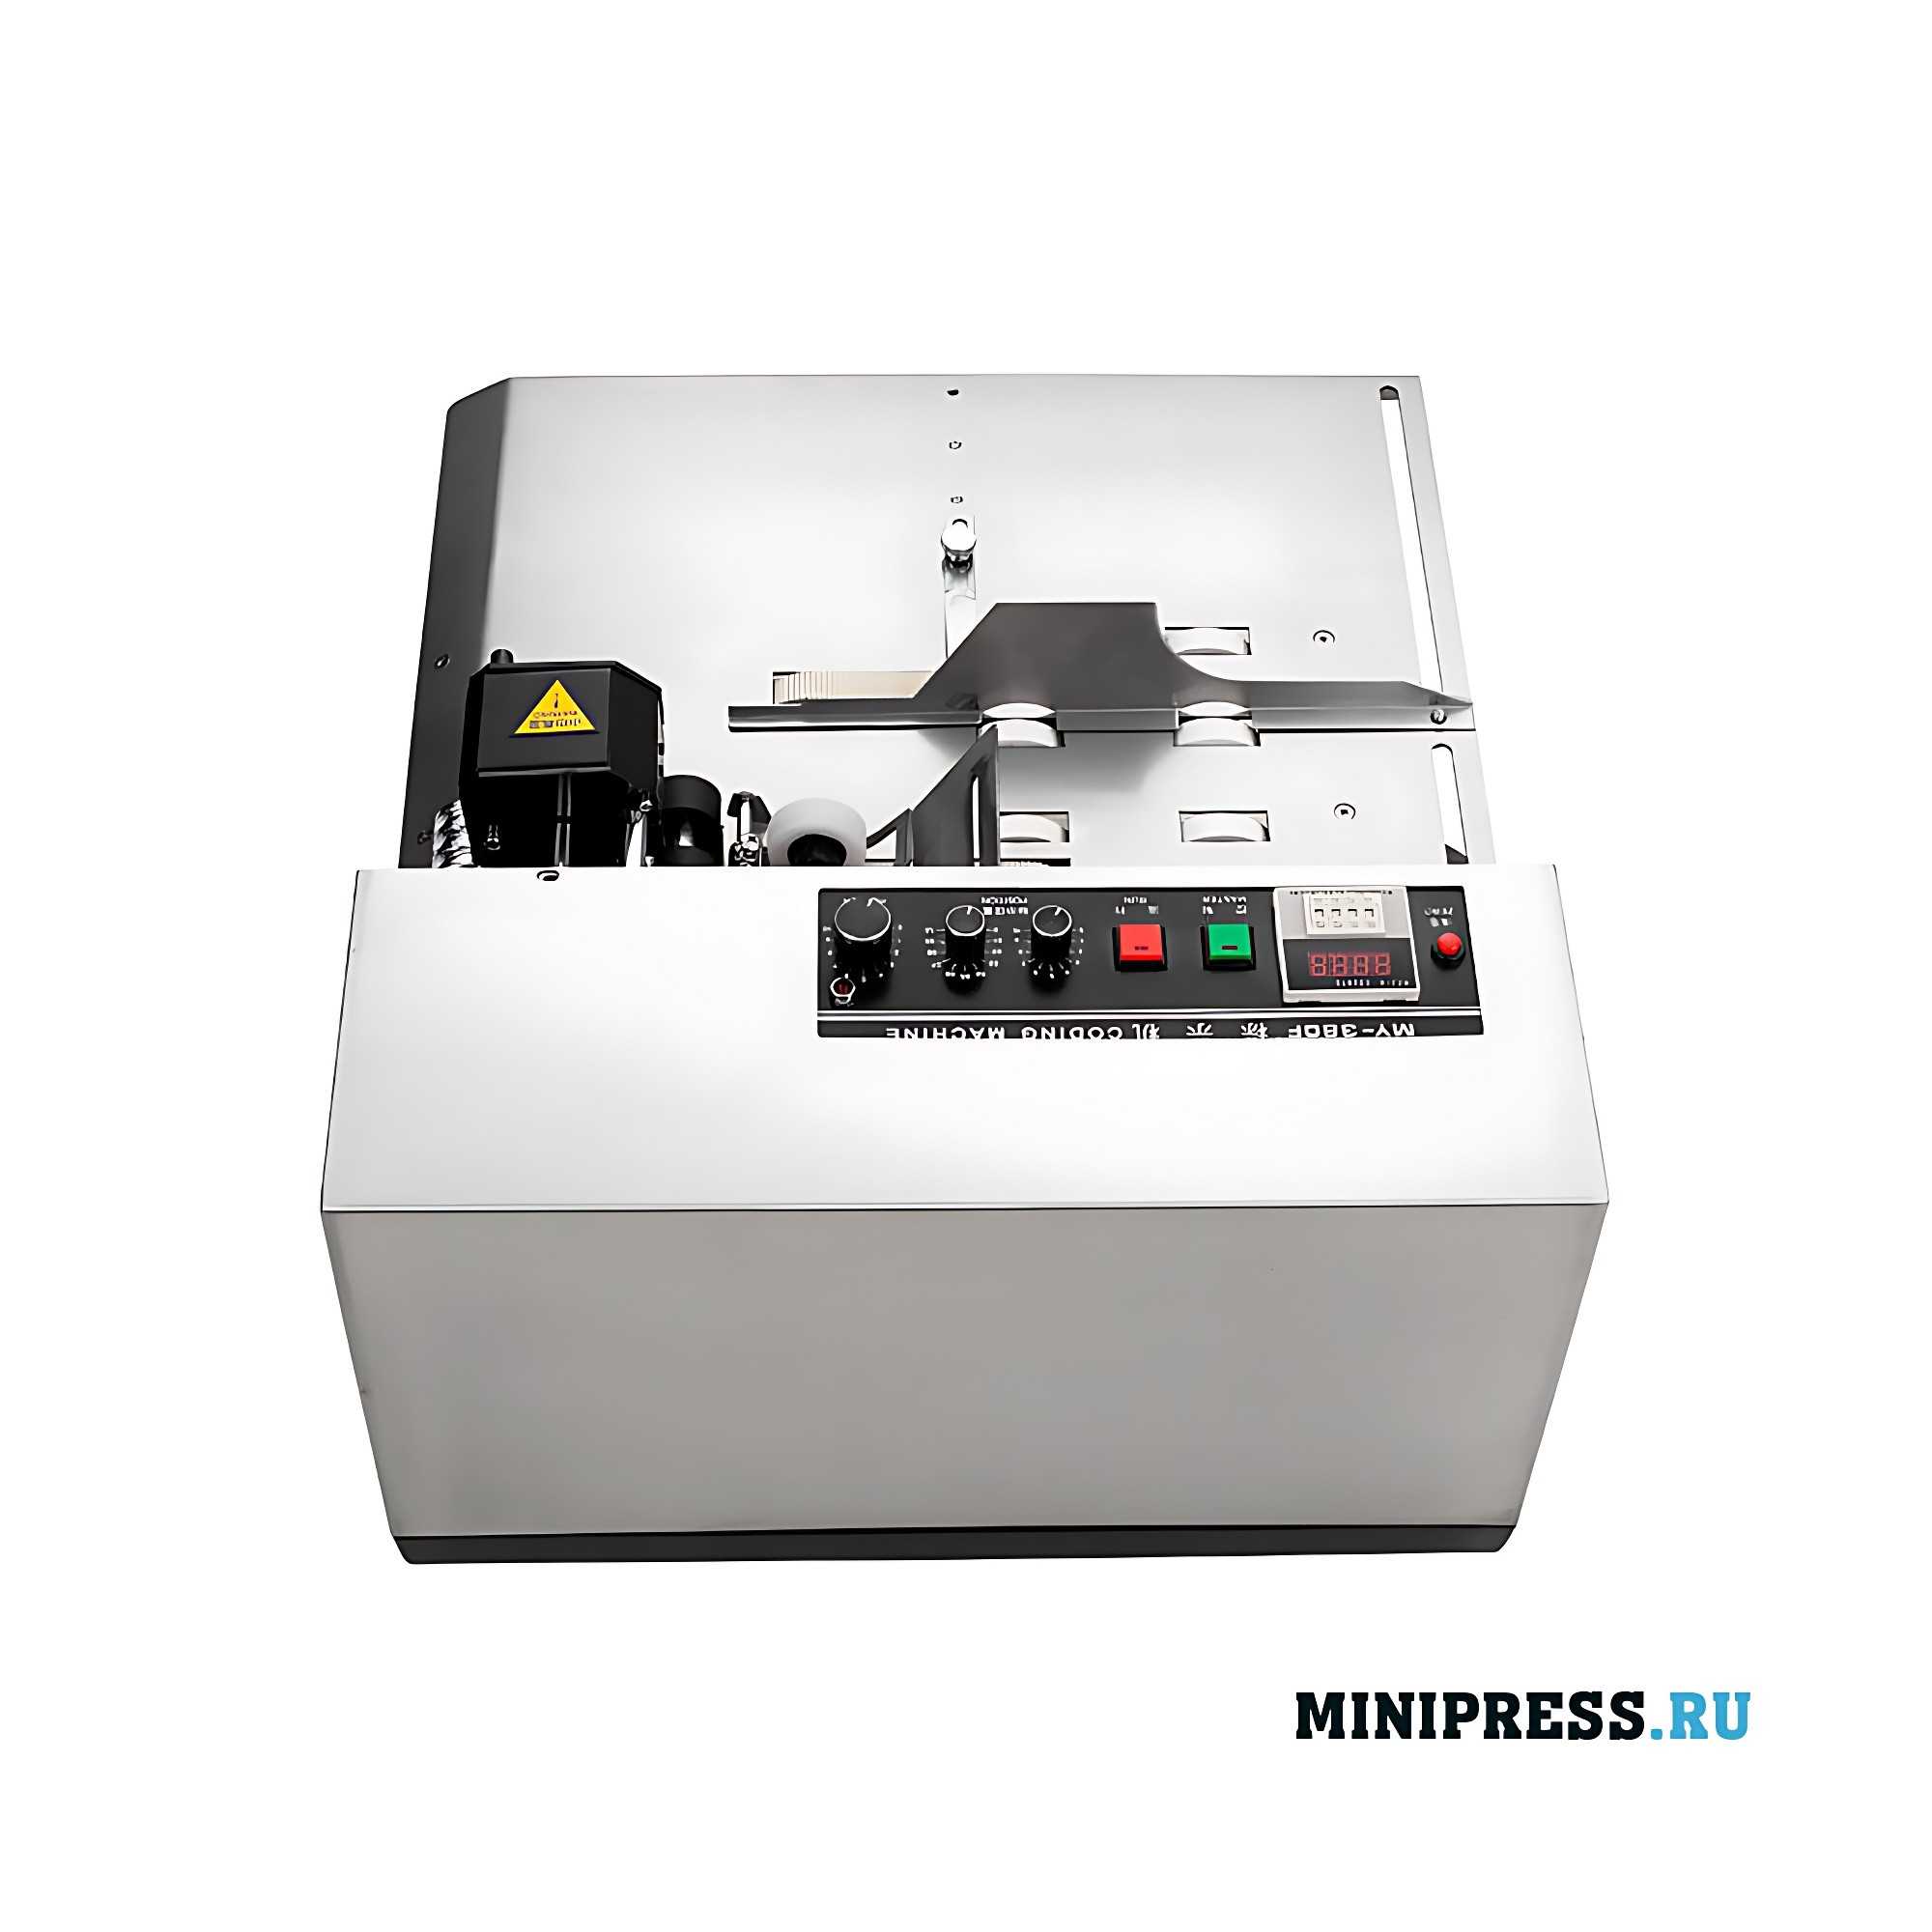 Desktop printer for embossing expiration date on cardboard KP-38